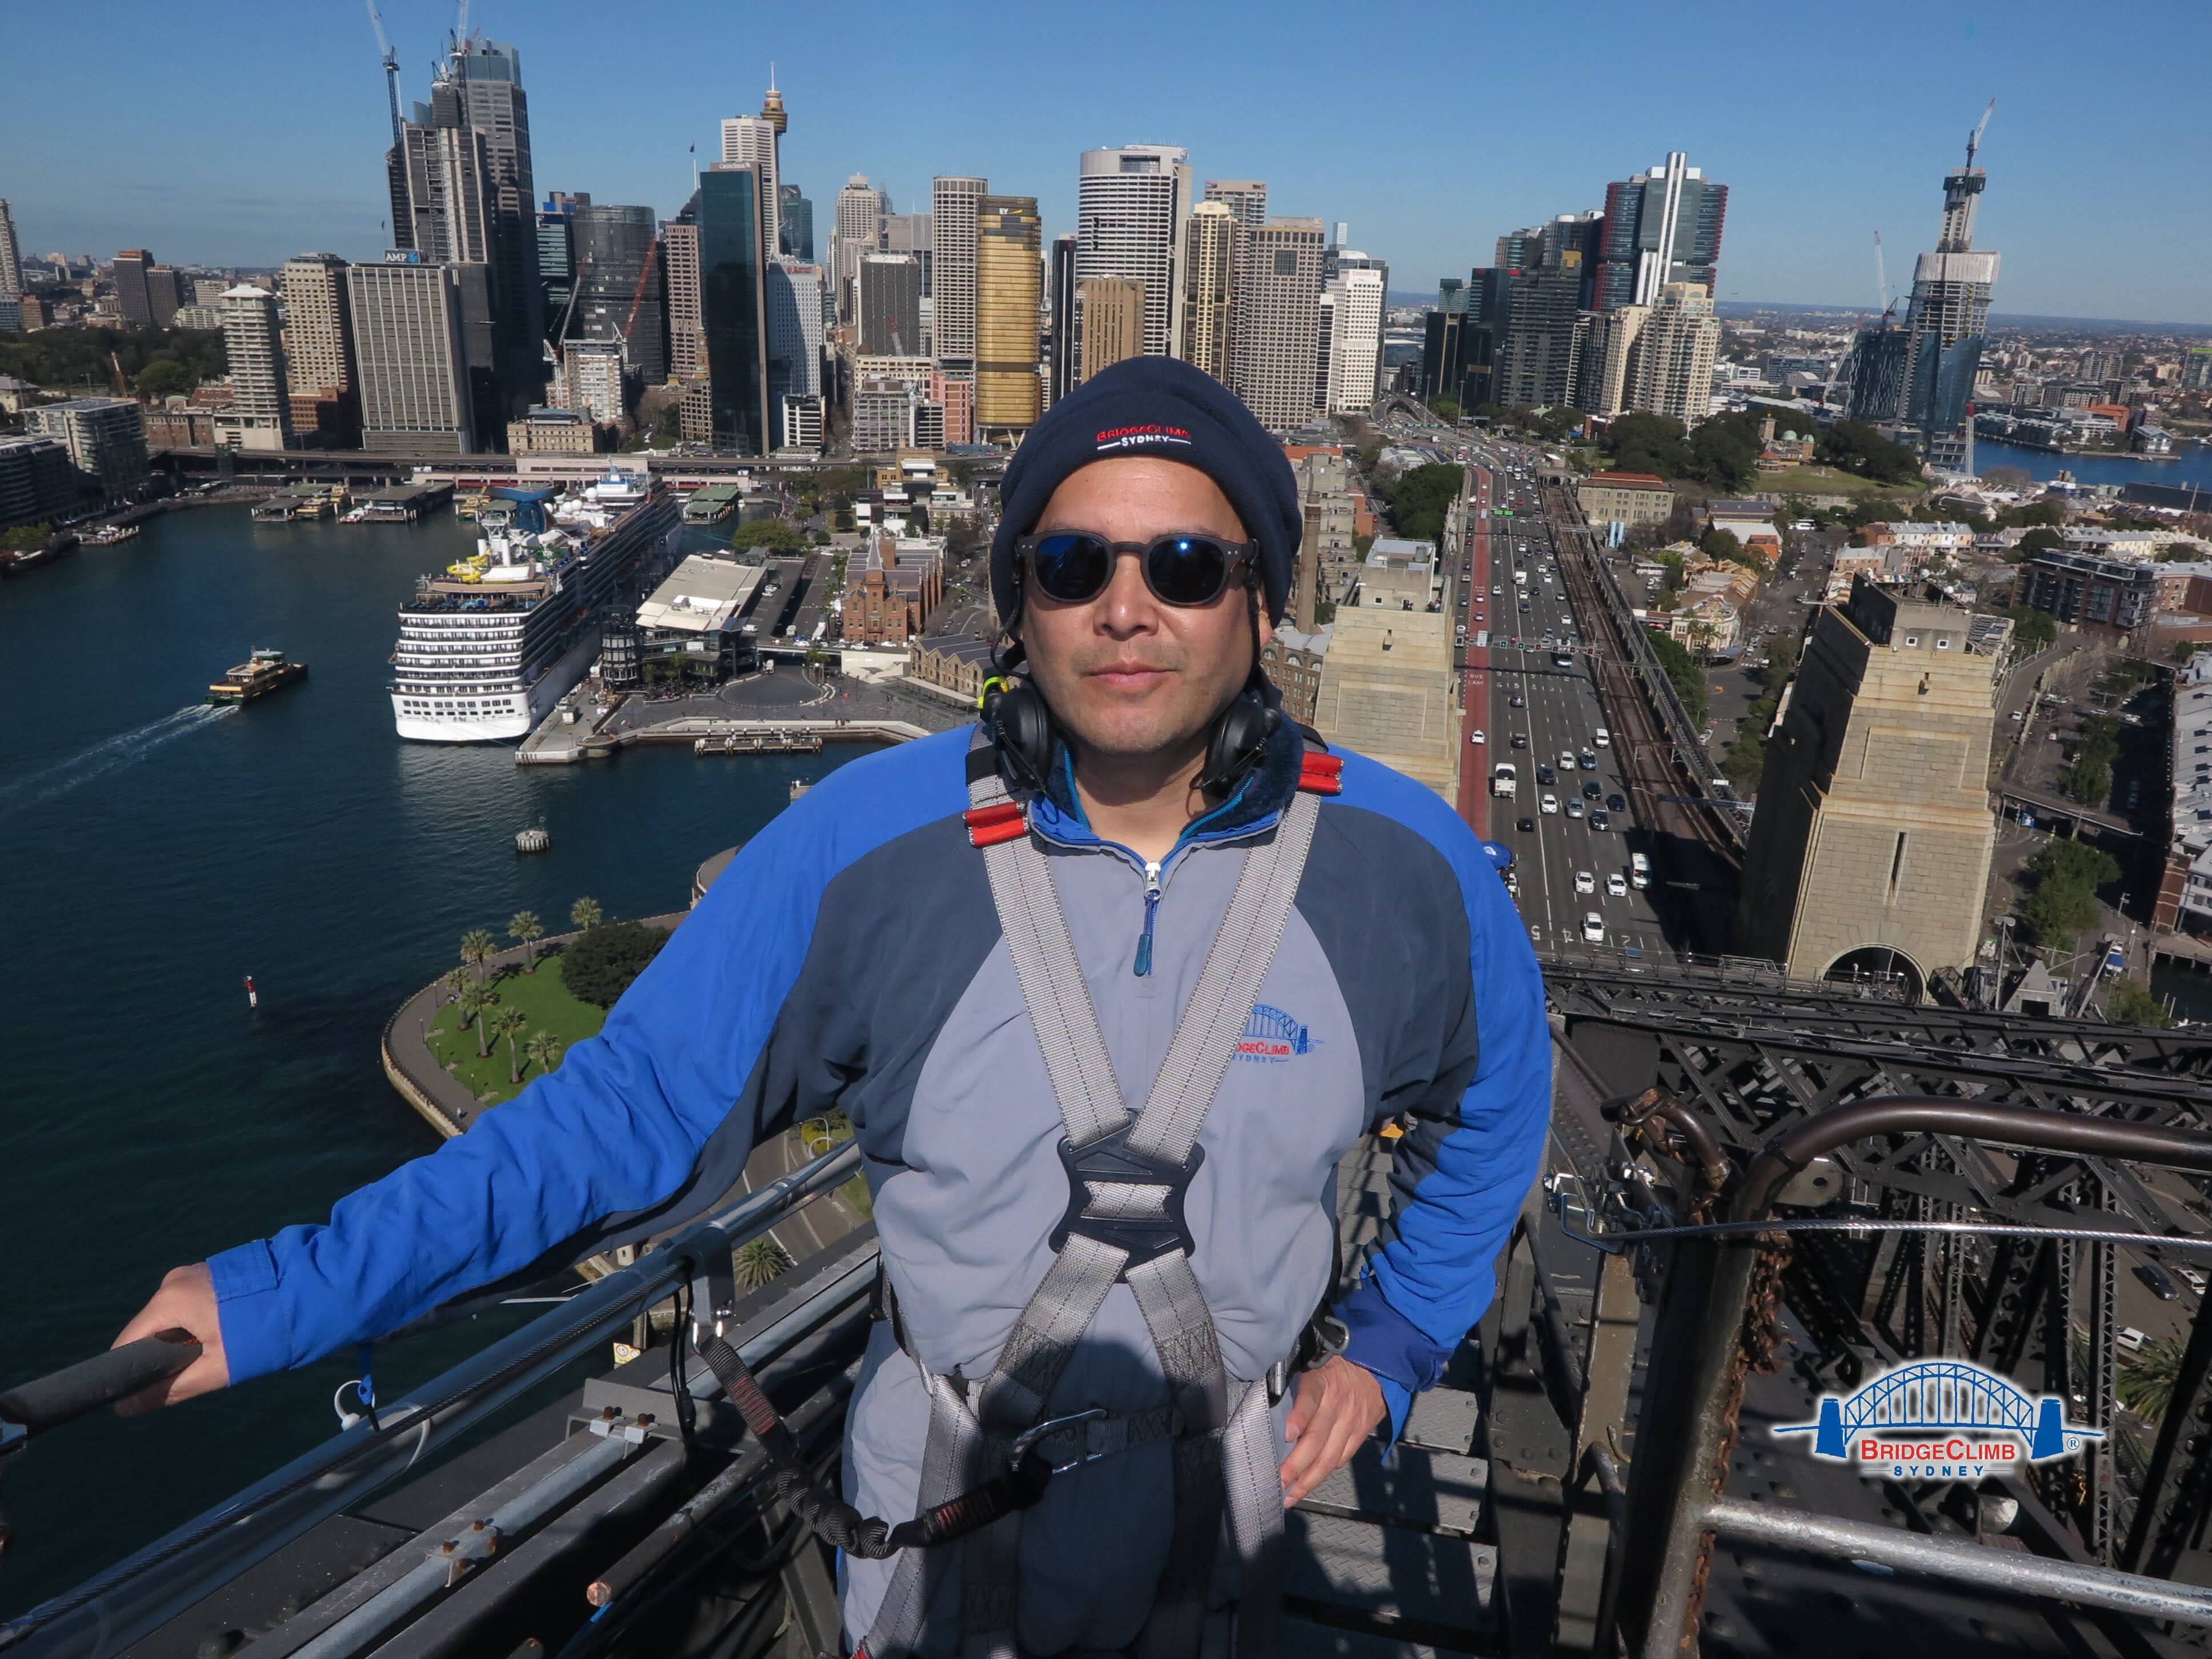 Sydney Harbour Bridge Climb | シドニーの観光・オプショナルツアー